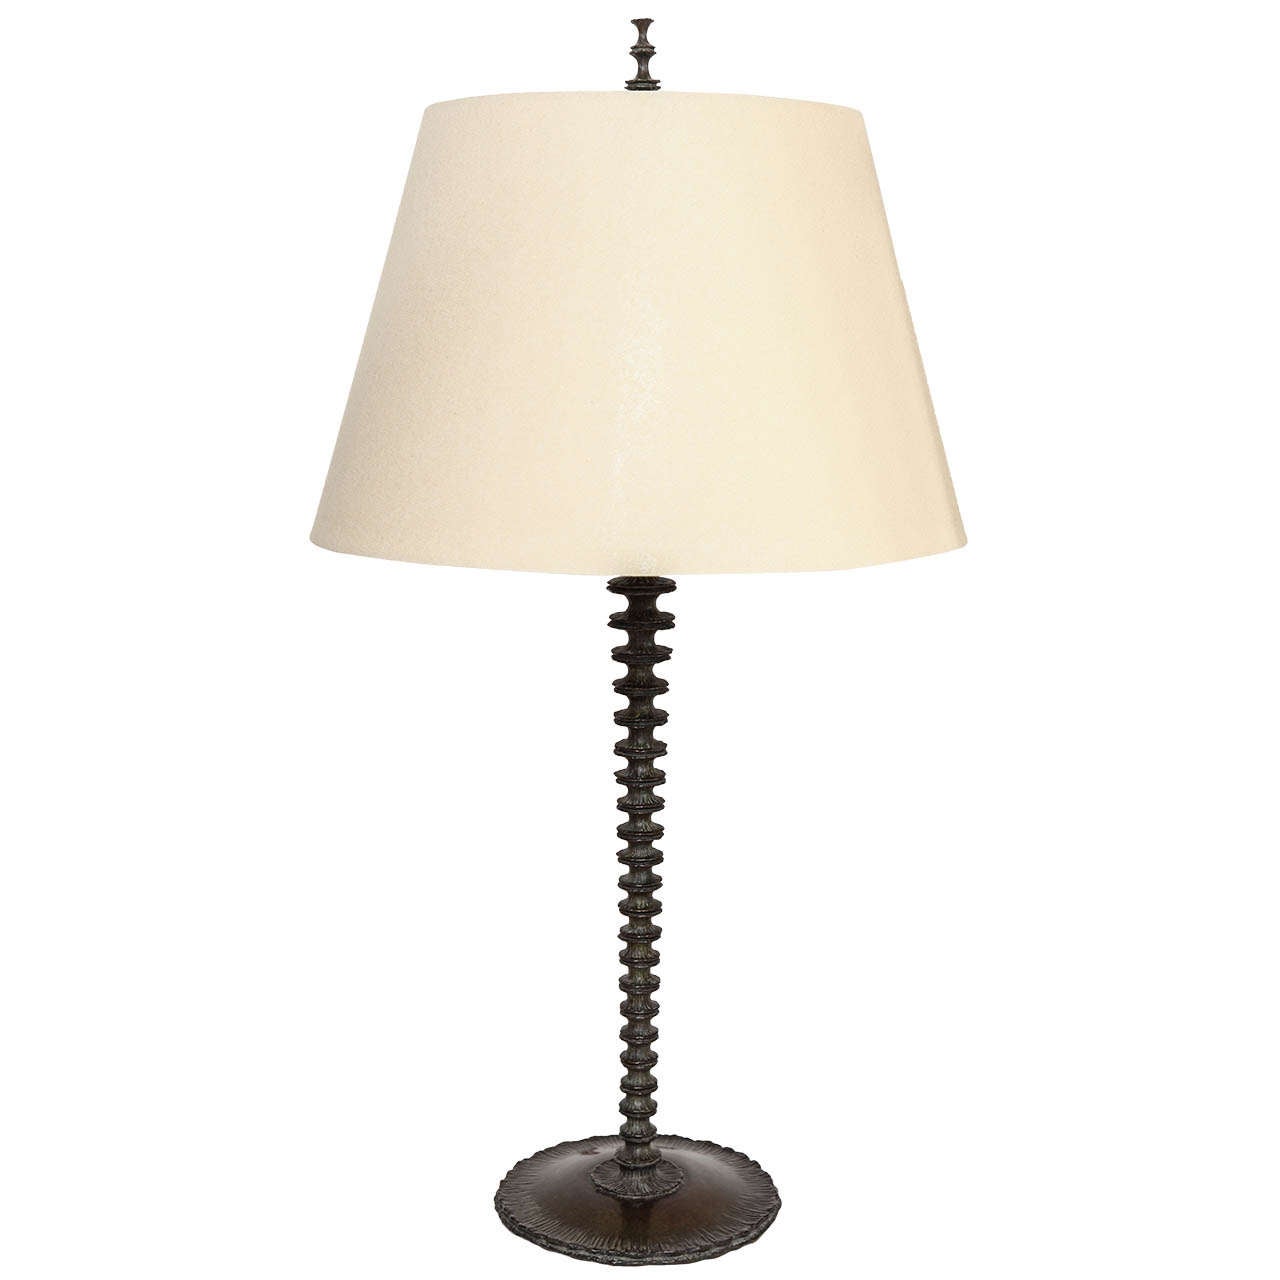 WP Sullivan Kennerson Table Lamp